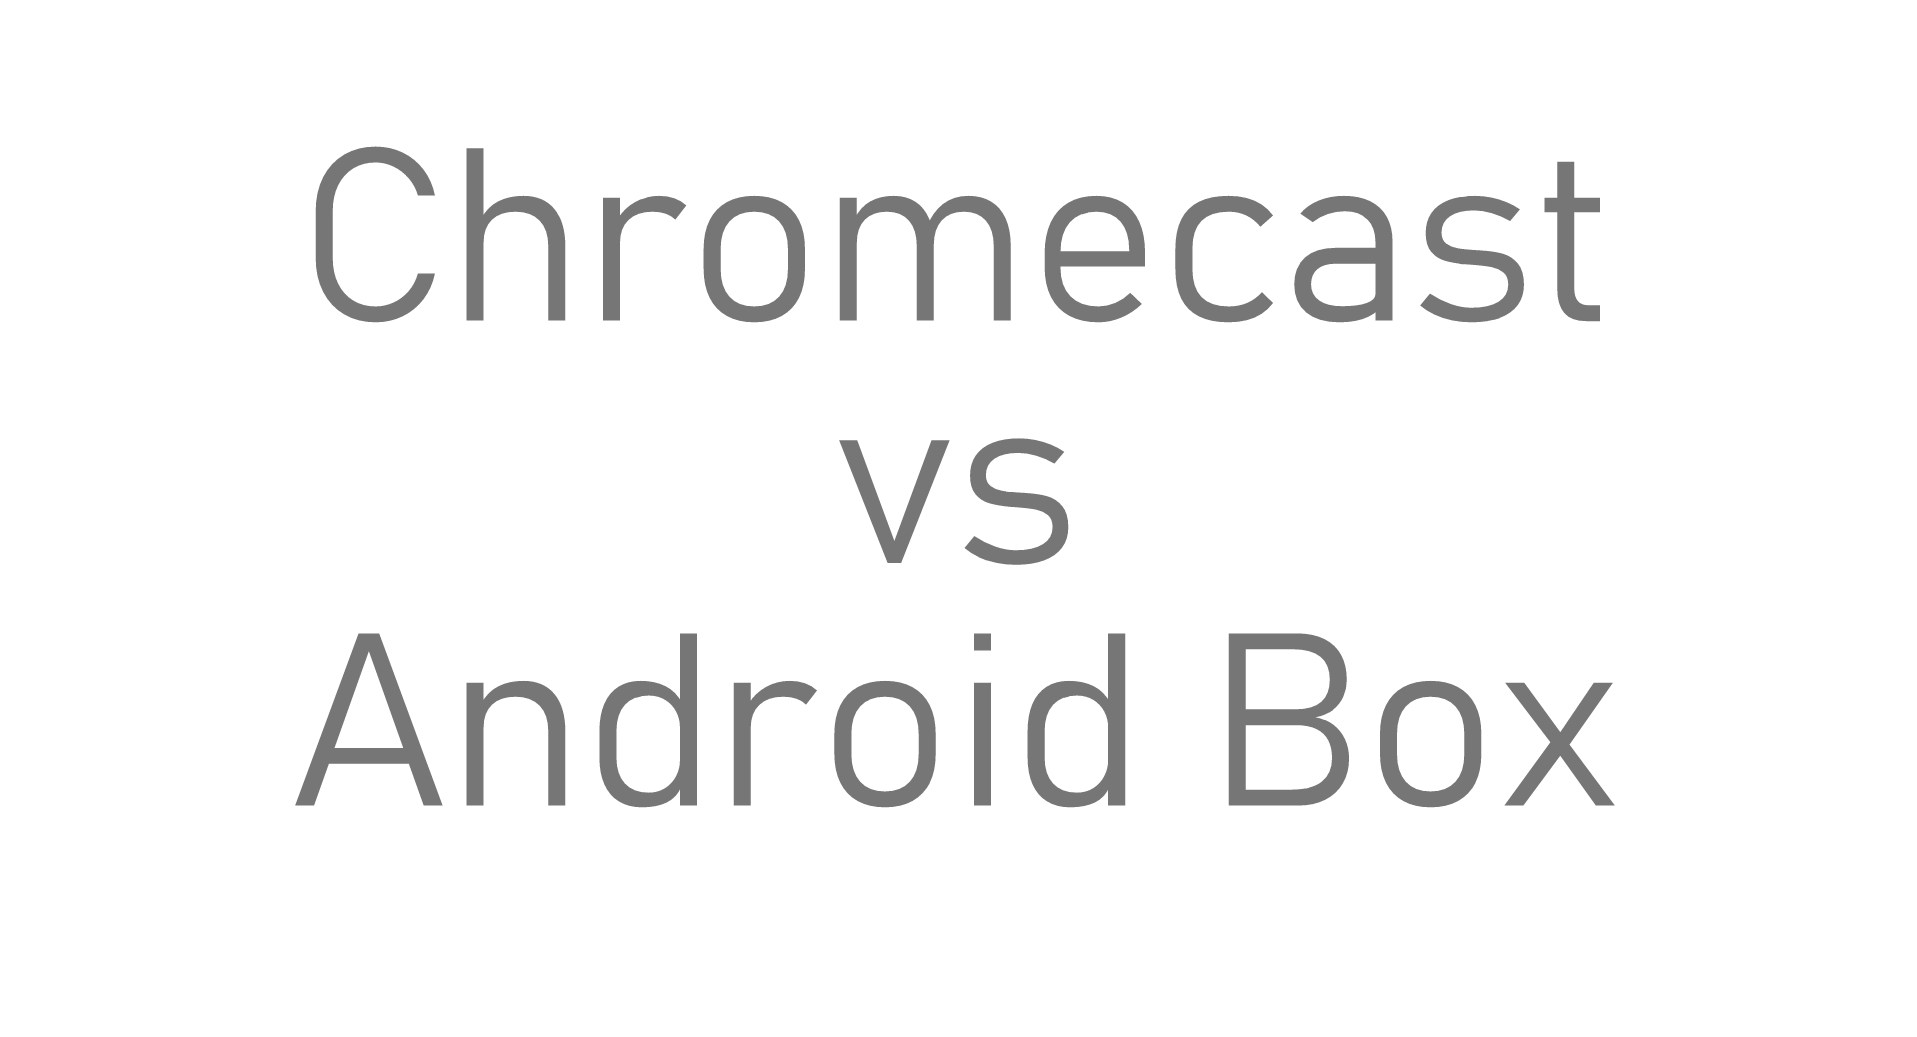 Chromecast VS Android Box